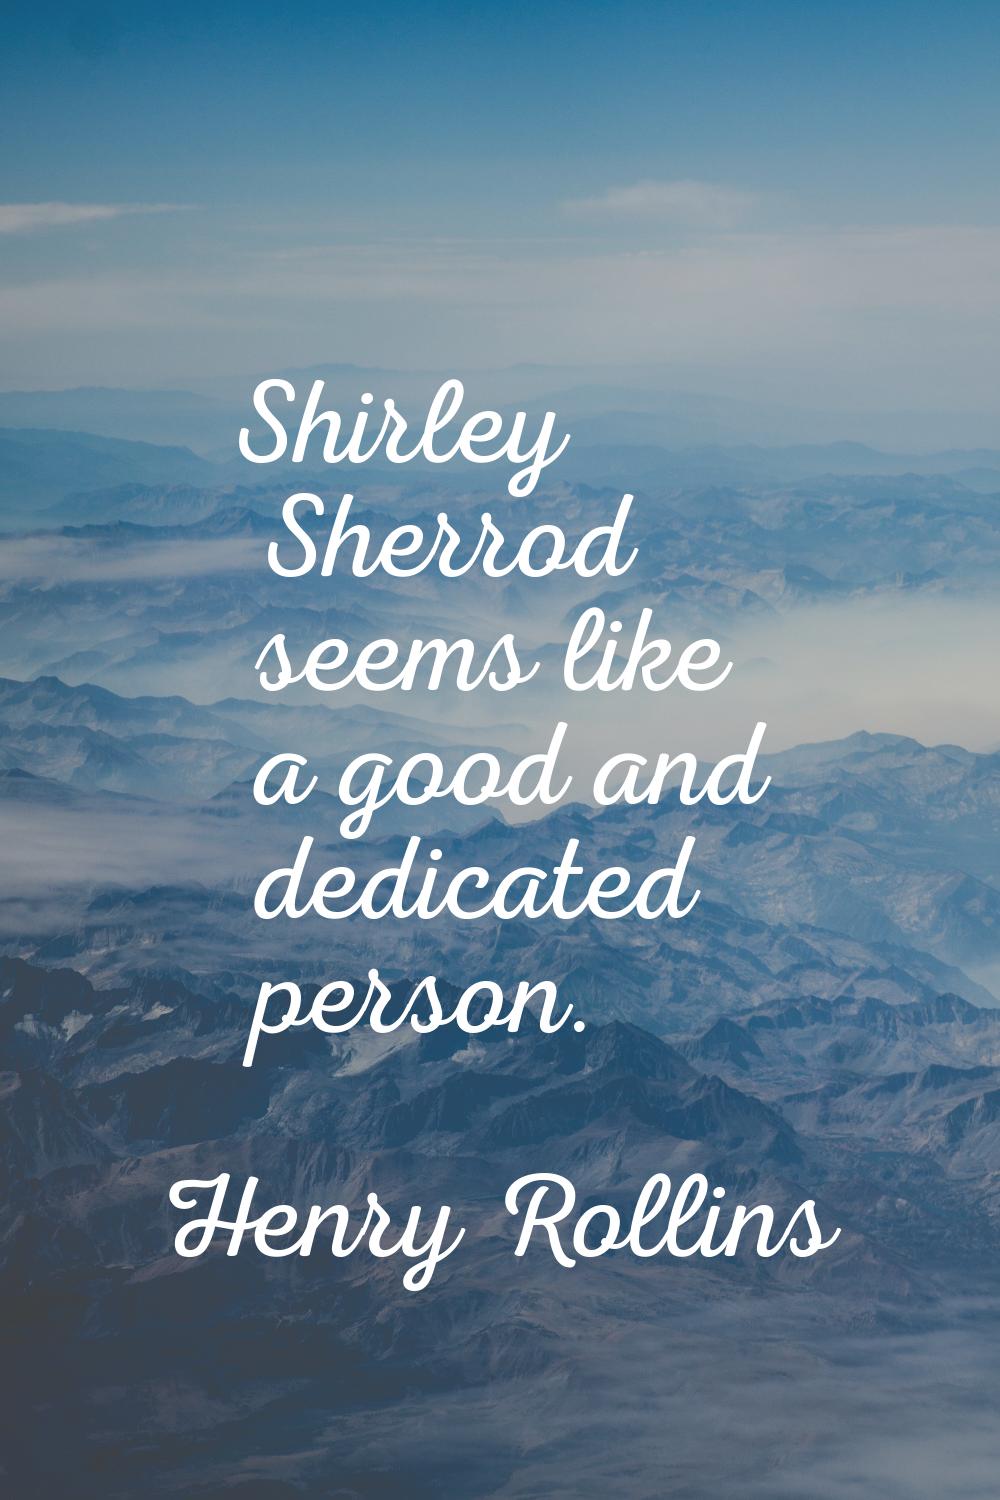 Shirley Sherrod seems like a good and dedicated person.